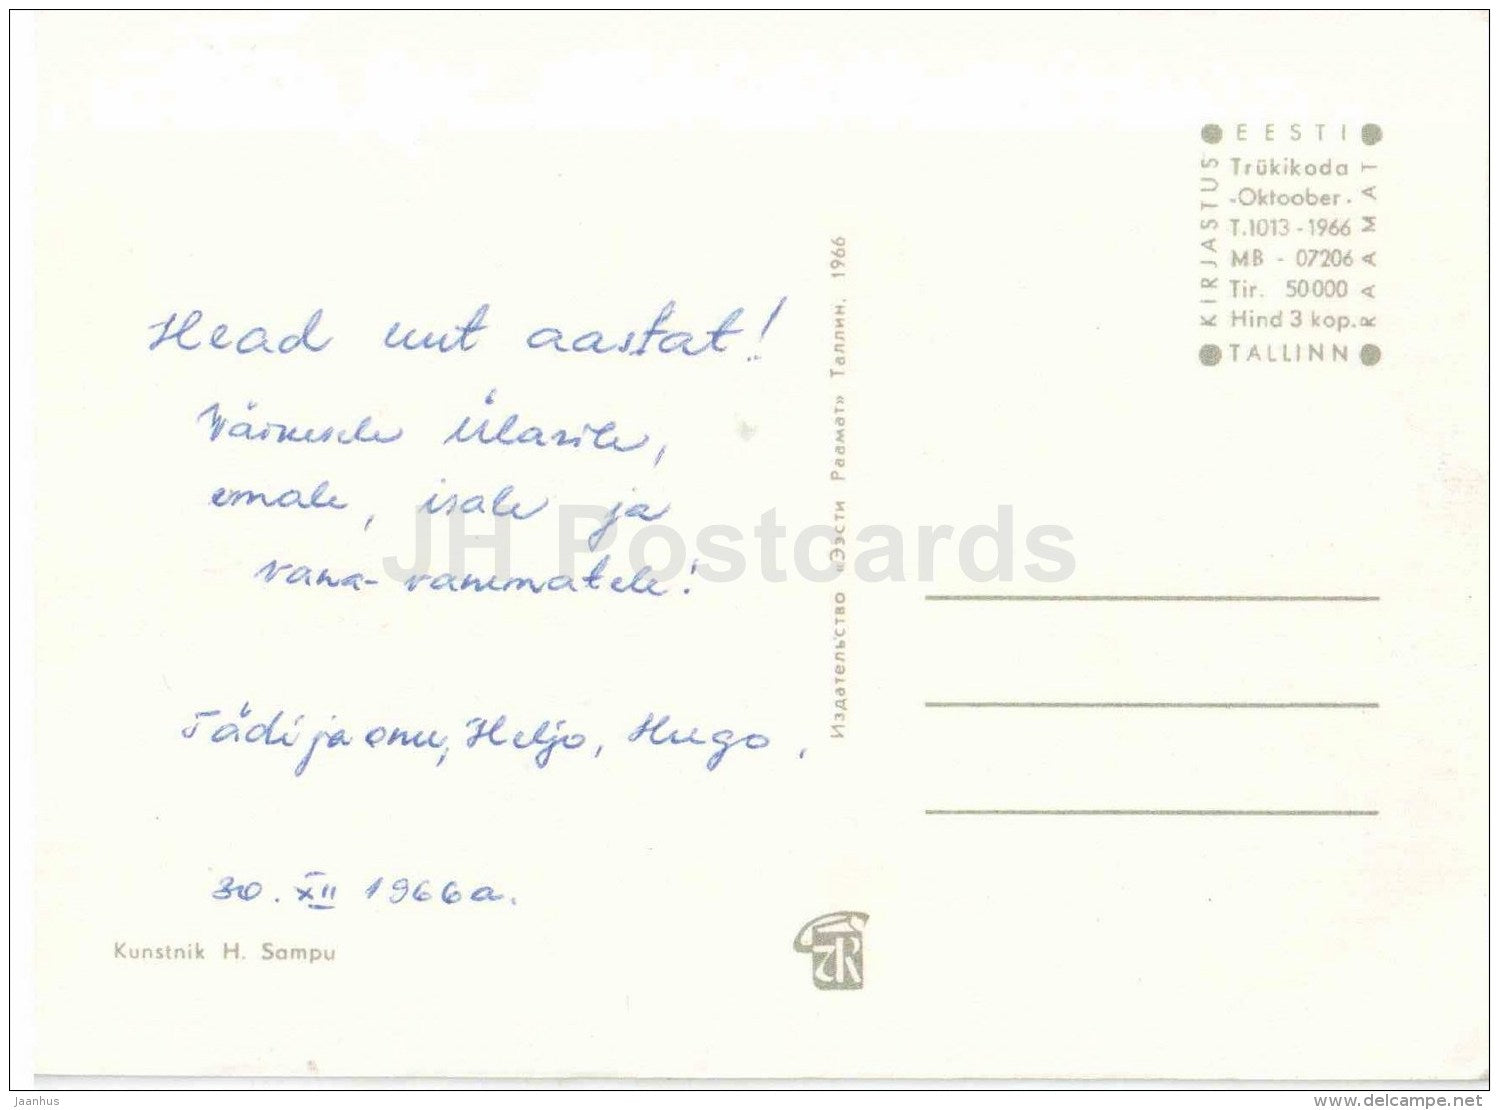 New Year Greeting Card by H. Sampu - Santa Claus - train - 1966 - Estonia USSR - used - JH Postcards